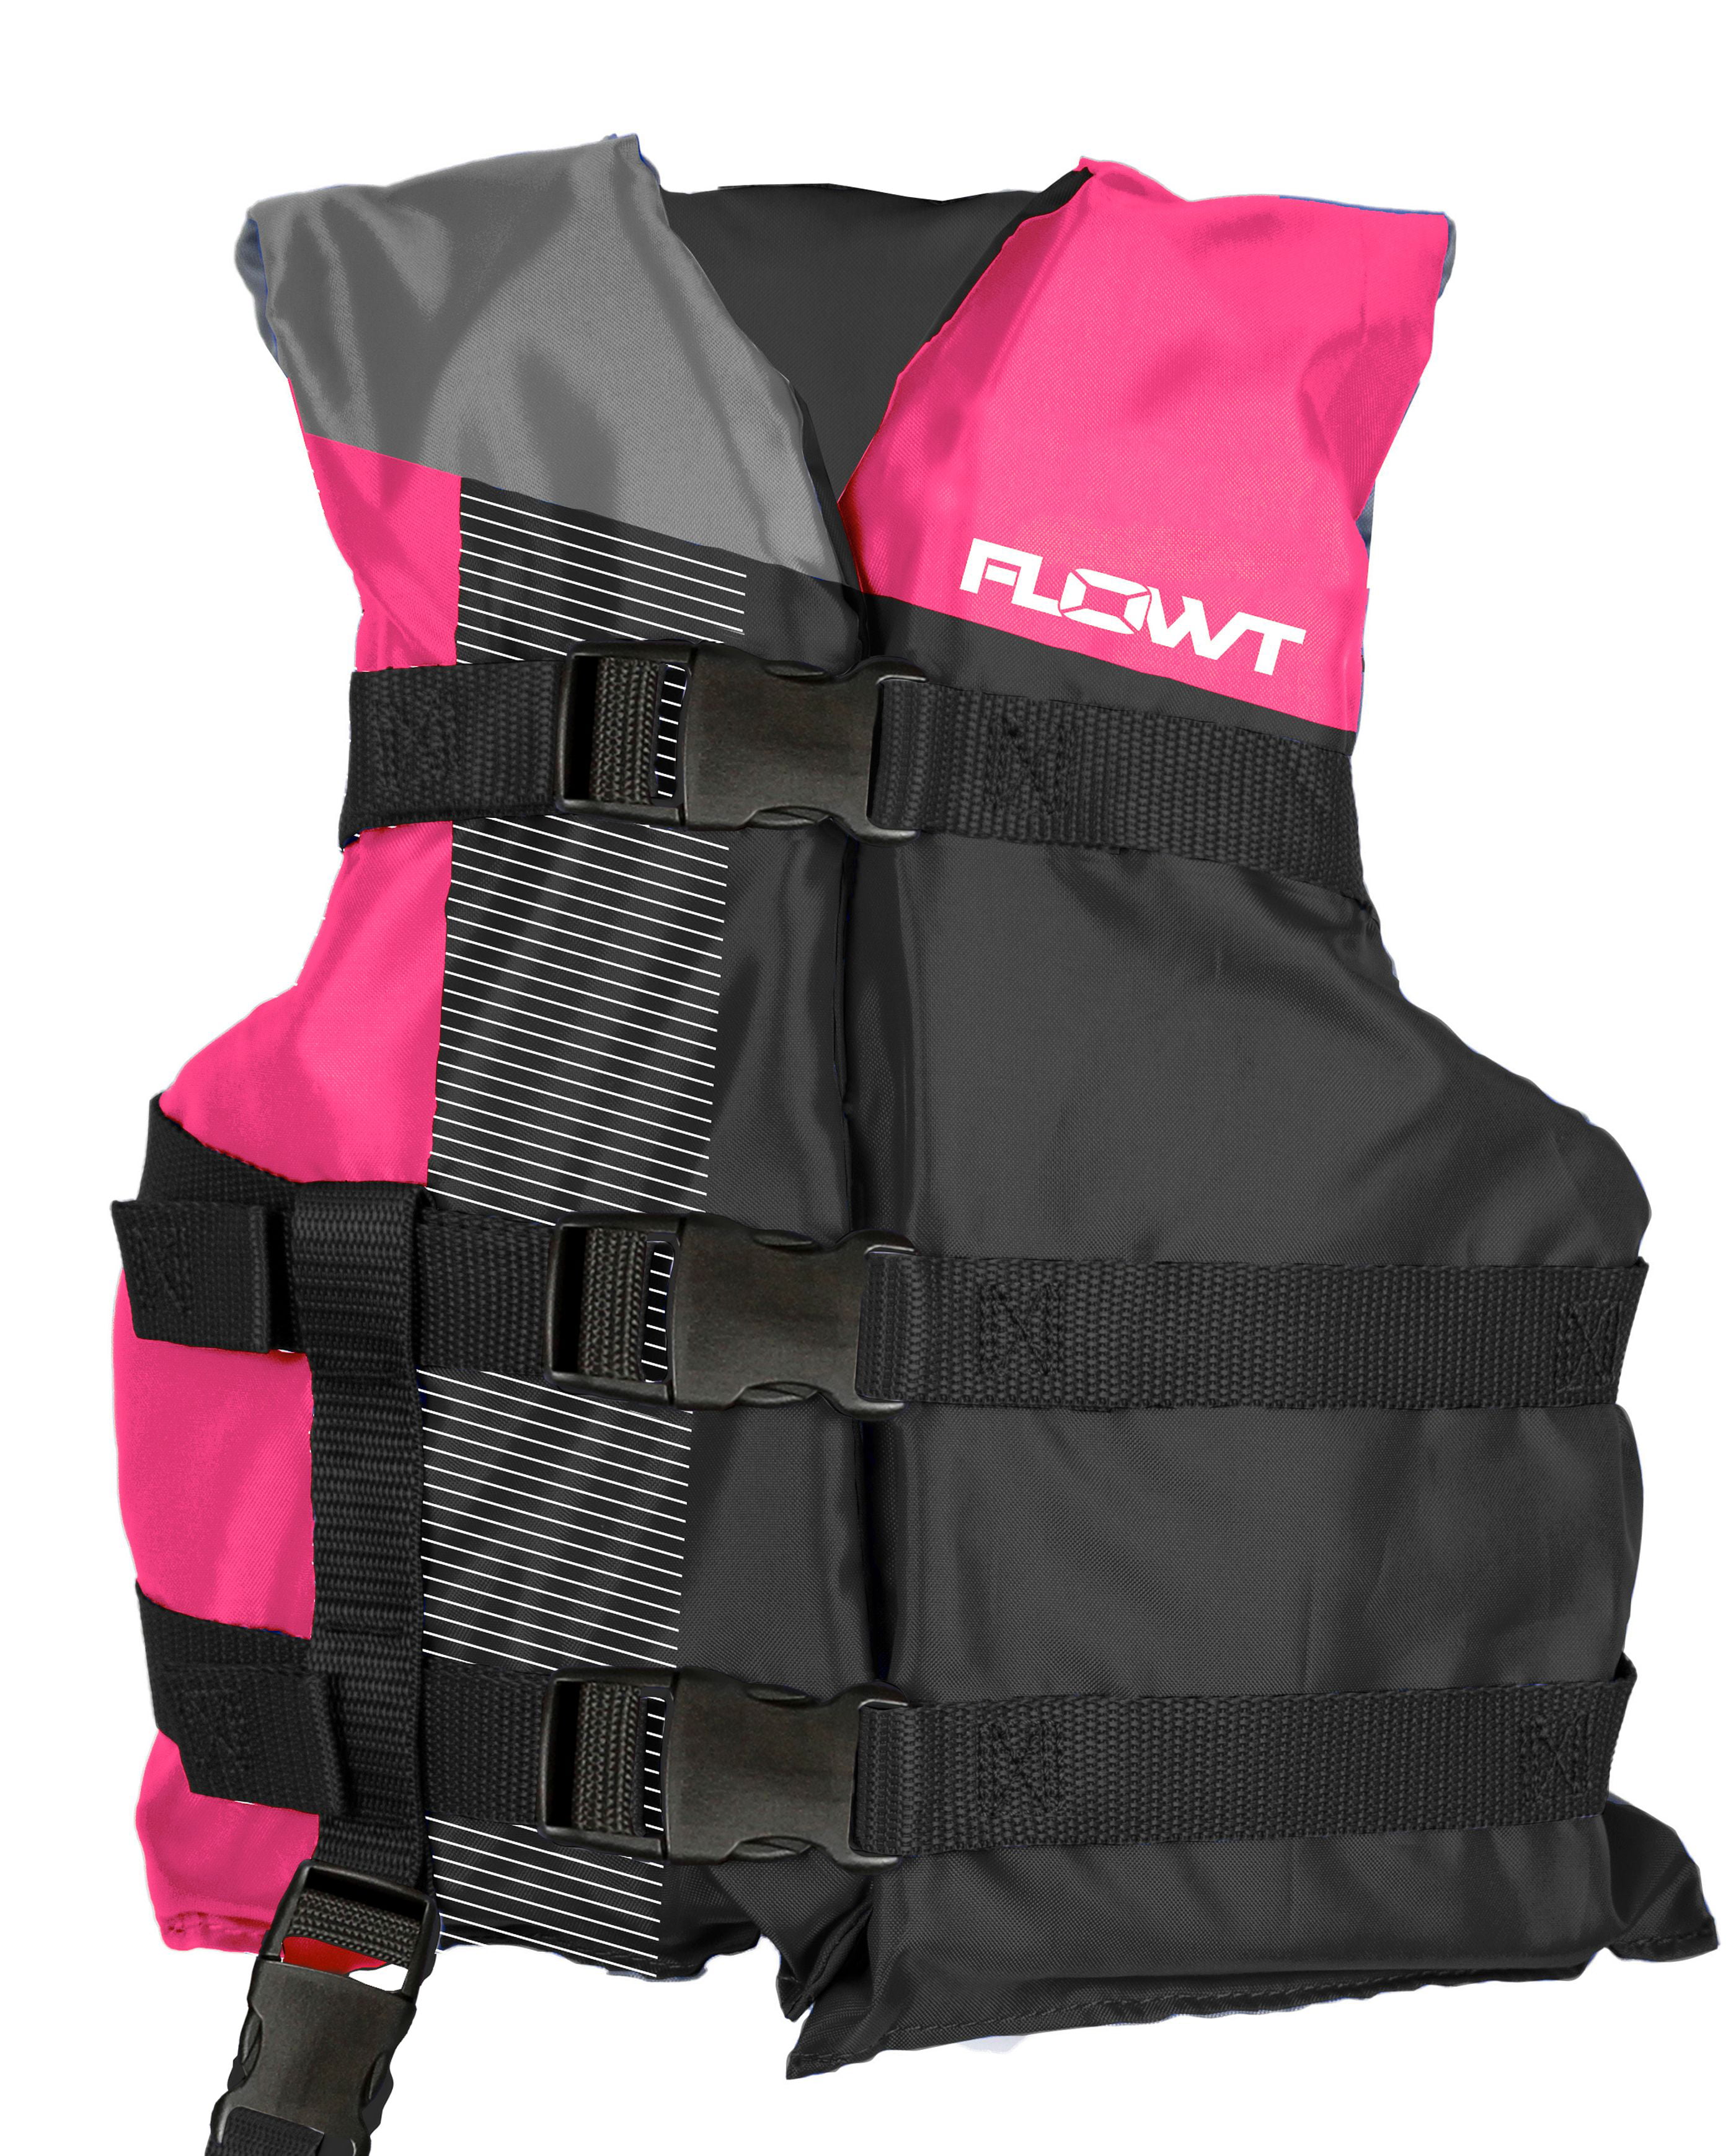 FLOWT All Sport Life Vest - USCG Approved Type III PFD - Walmart.com